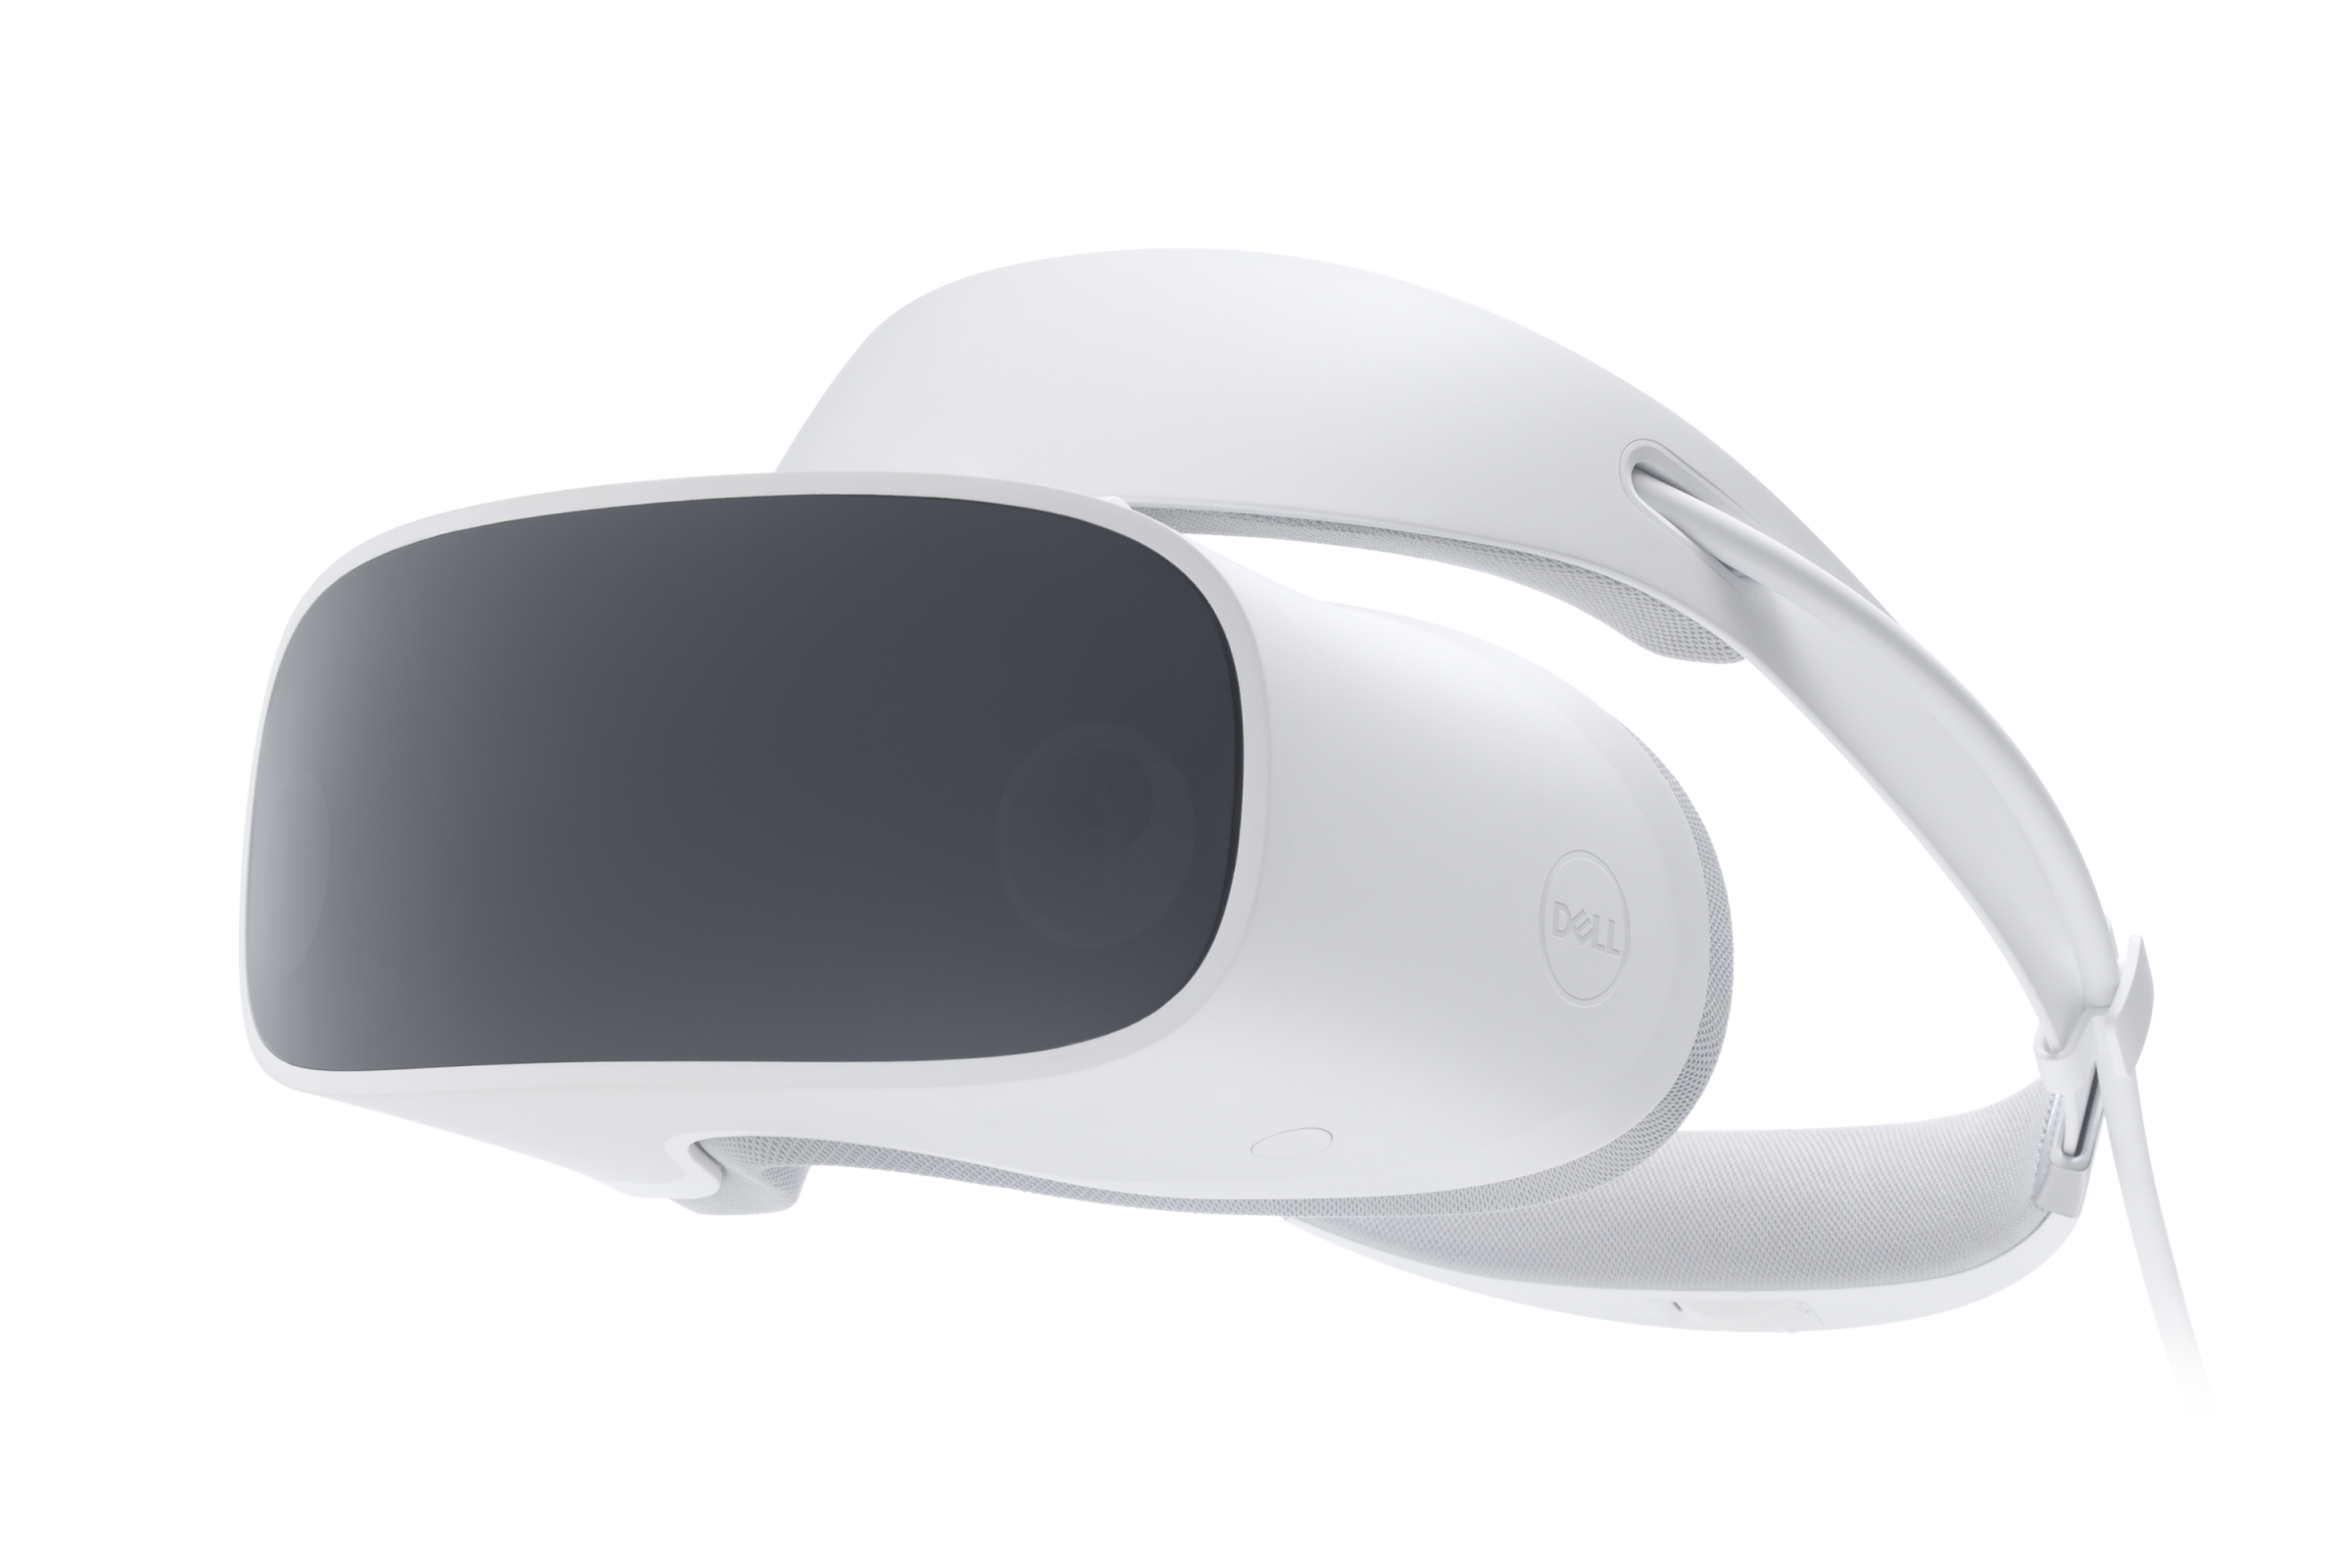 Windows 10 VR headsets